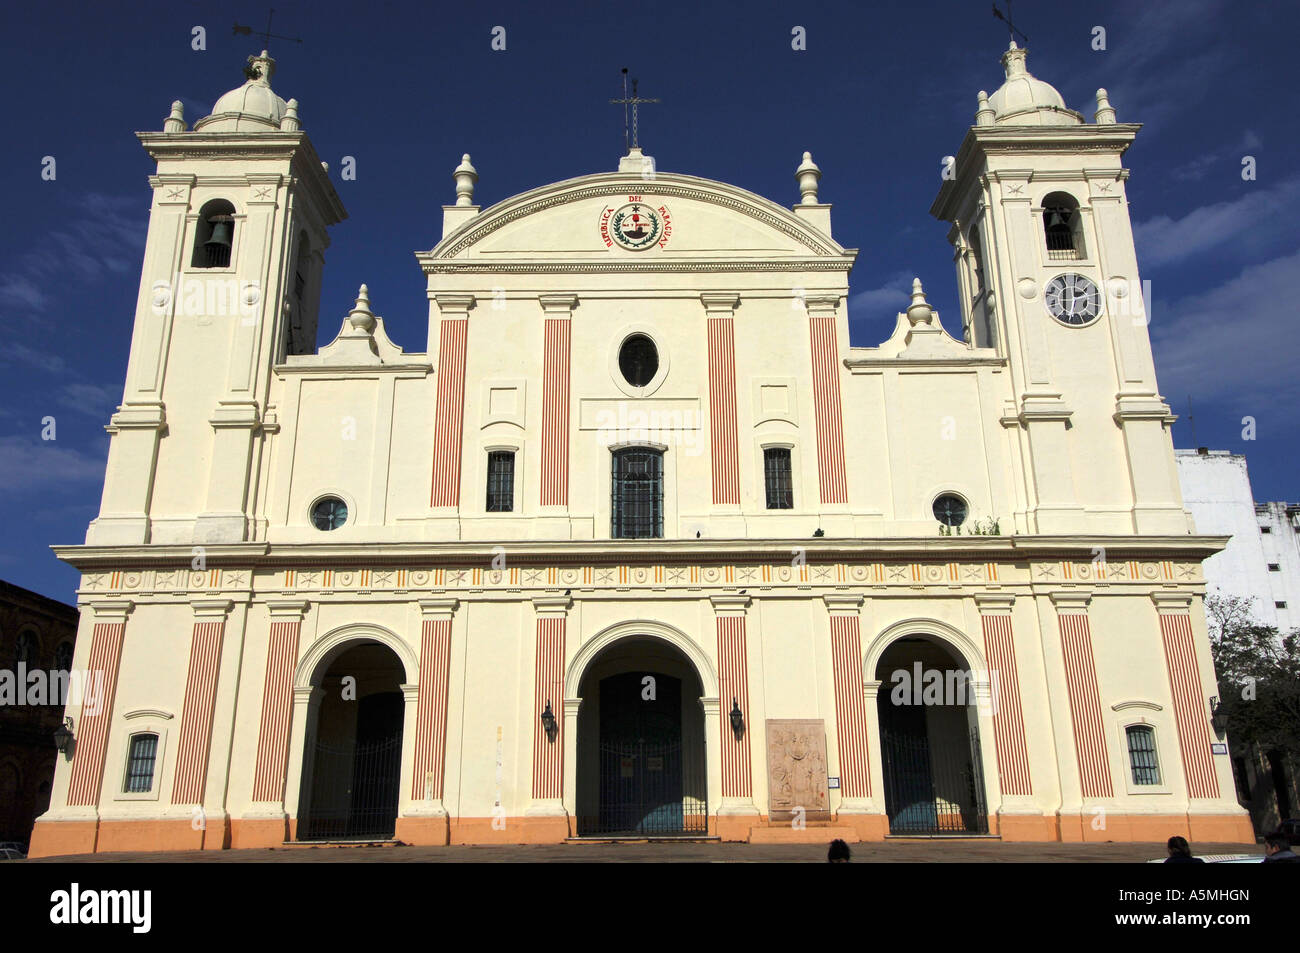 Asuncion Kathedrale Südamerika south america america del sud sudamerica latinoamerica Lateinamerika Paraguay Republica del Parag Stock Photo